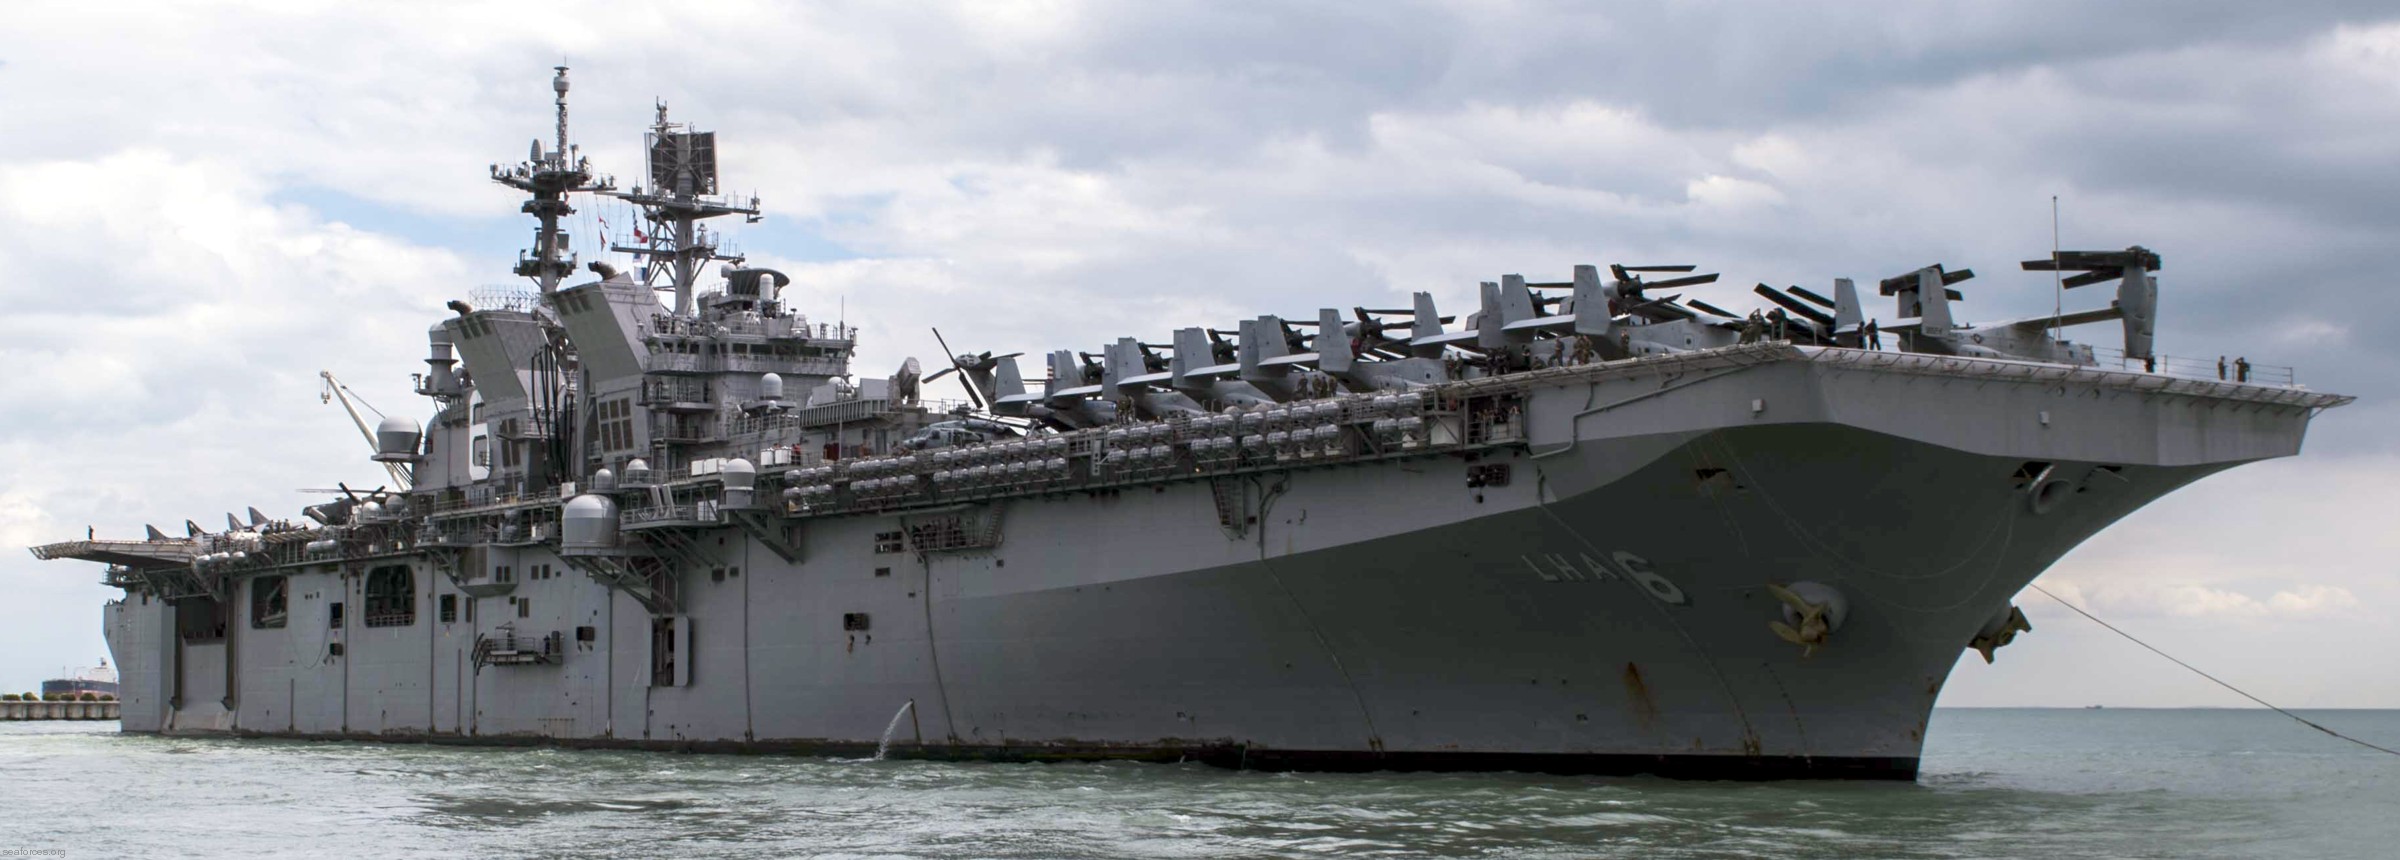 lha-6 uss america amphibious assault ship us navy 29 singapore